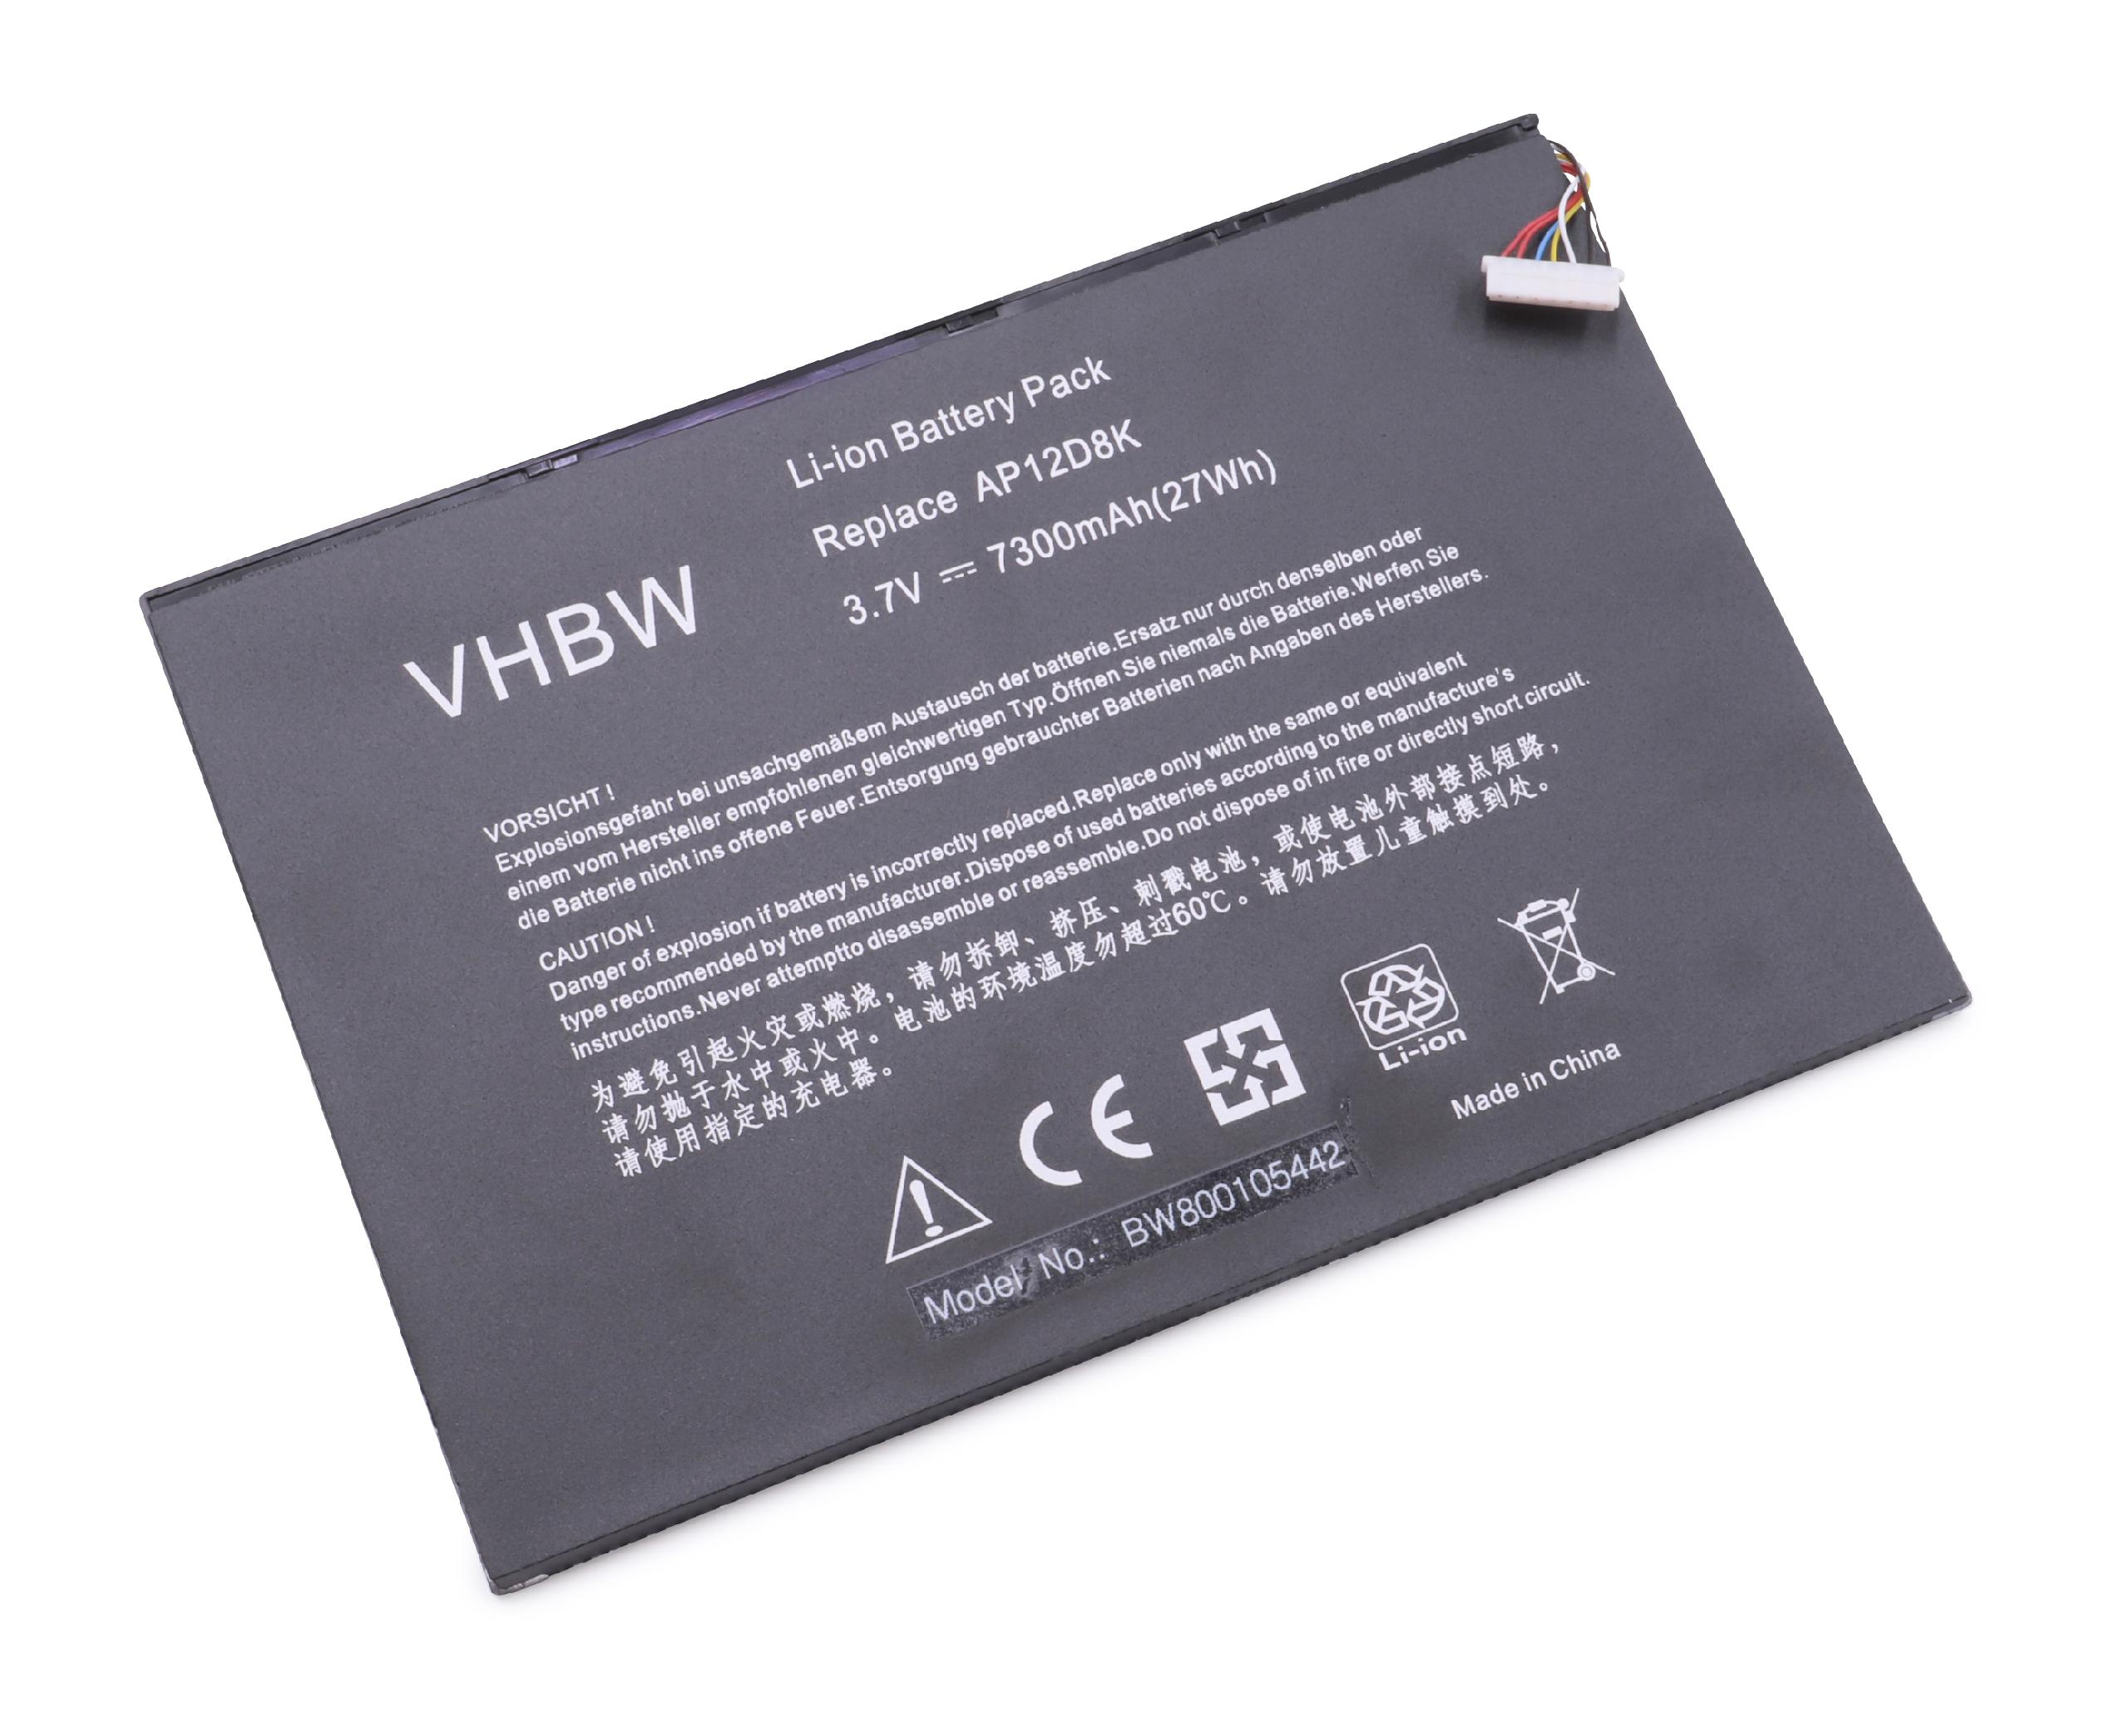 VHBW Ersatz für Acer für 7300 Akku, mAh 3.7 Volt, 1ICP4/83/103-2, AP12D8K Li-Polymer